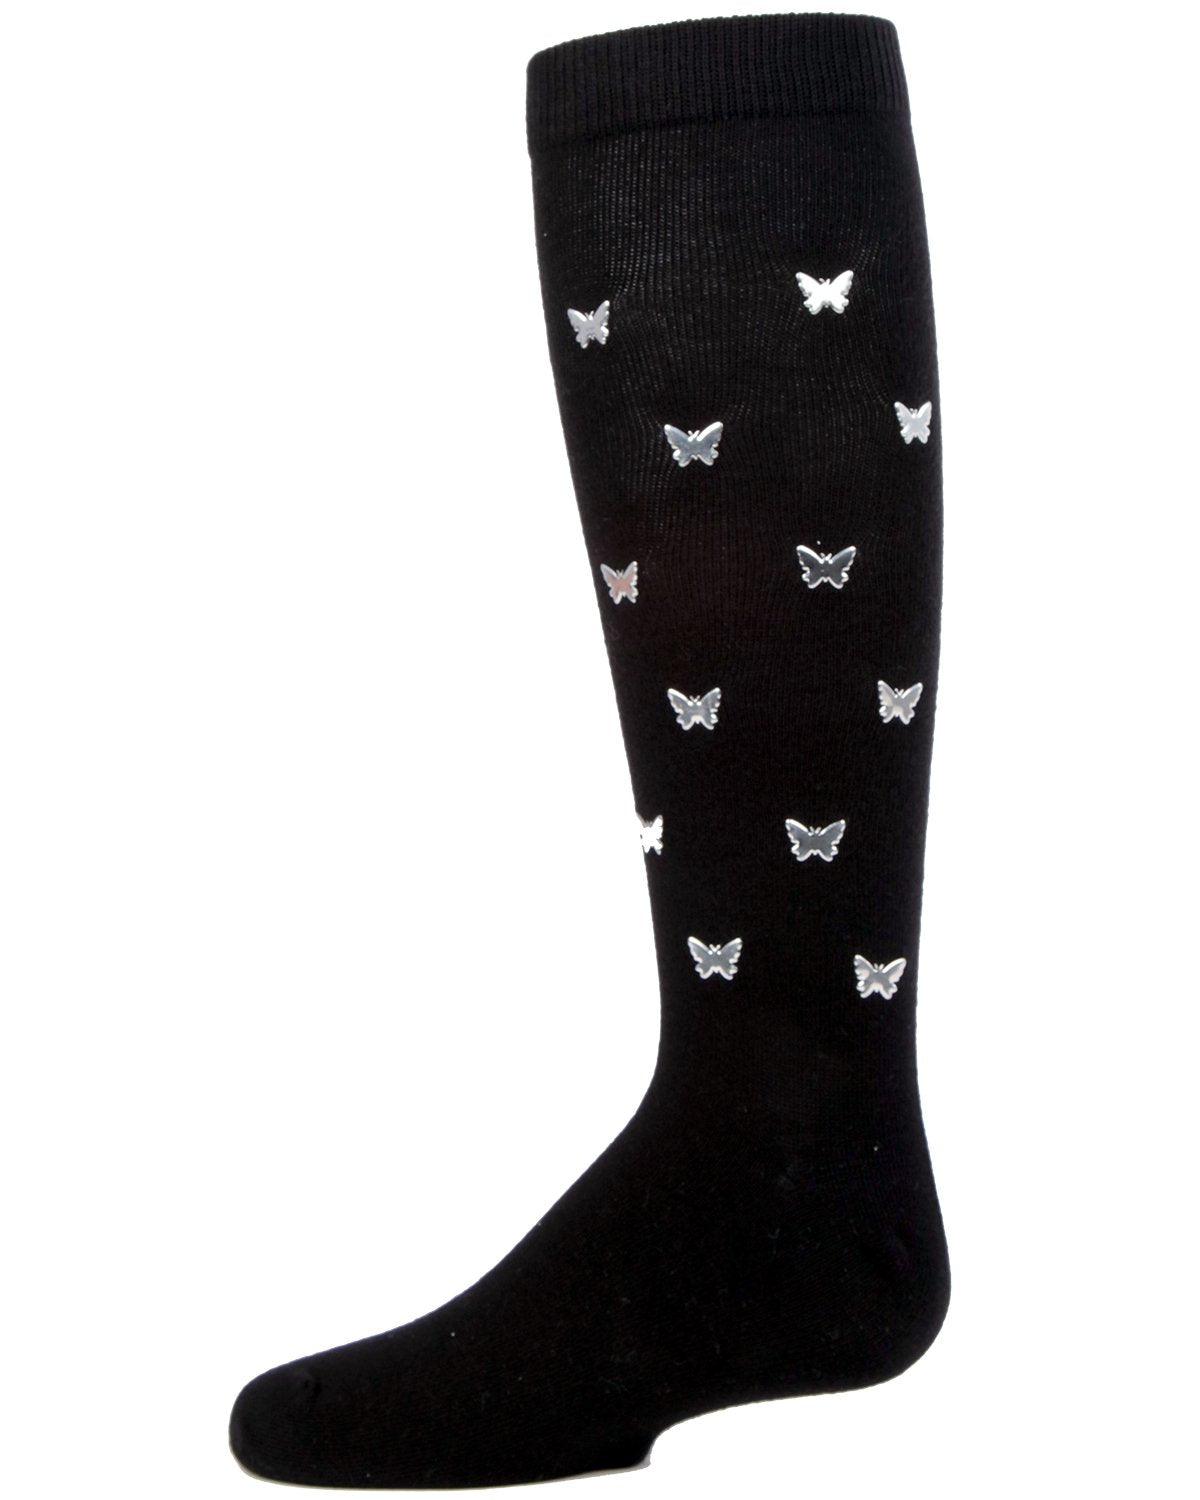 Fly Sky High Butterfly Girls Cotton Blend Knee Socks